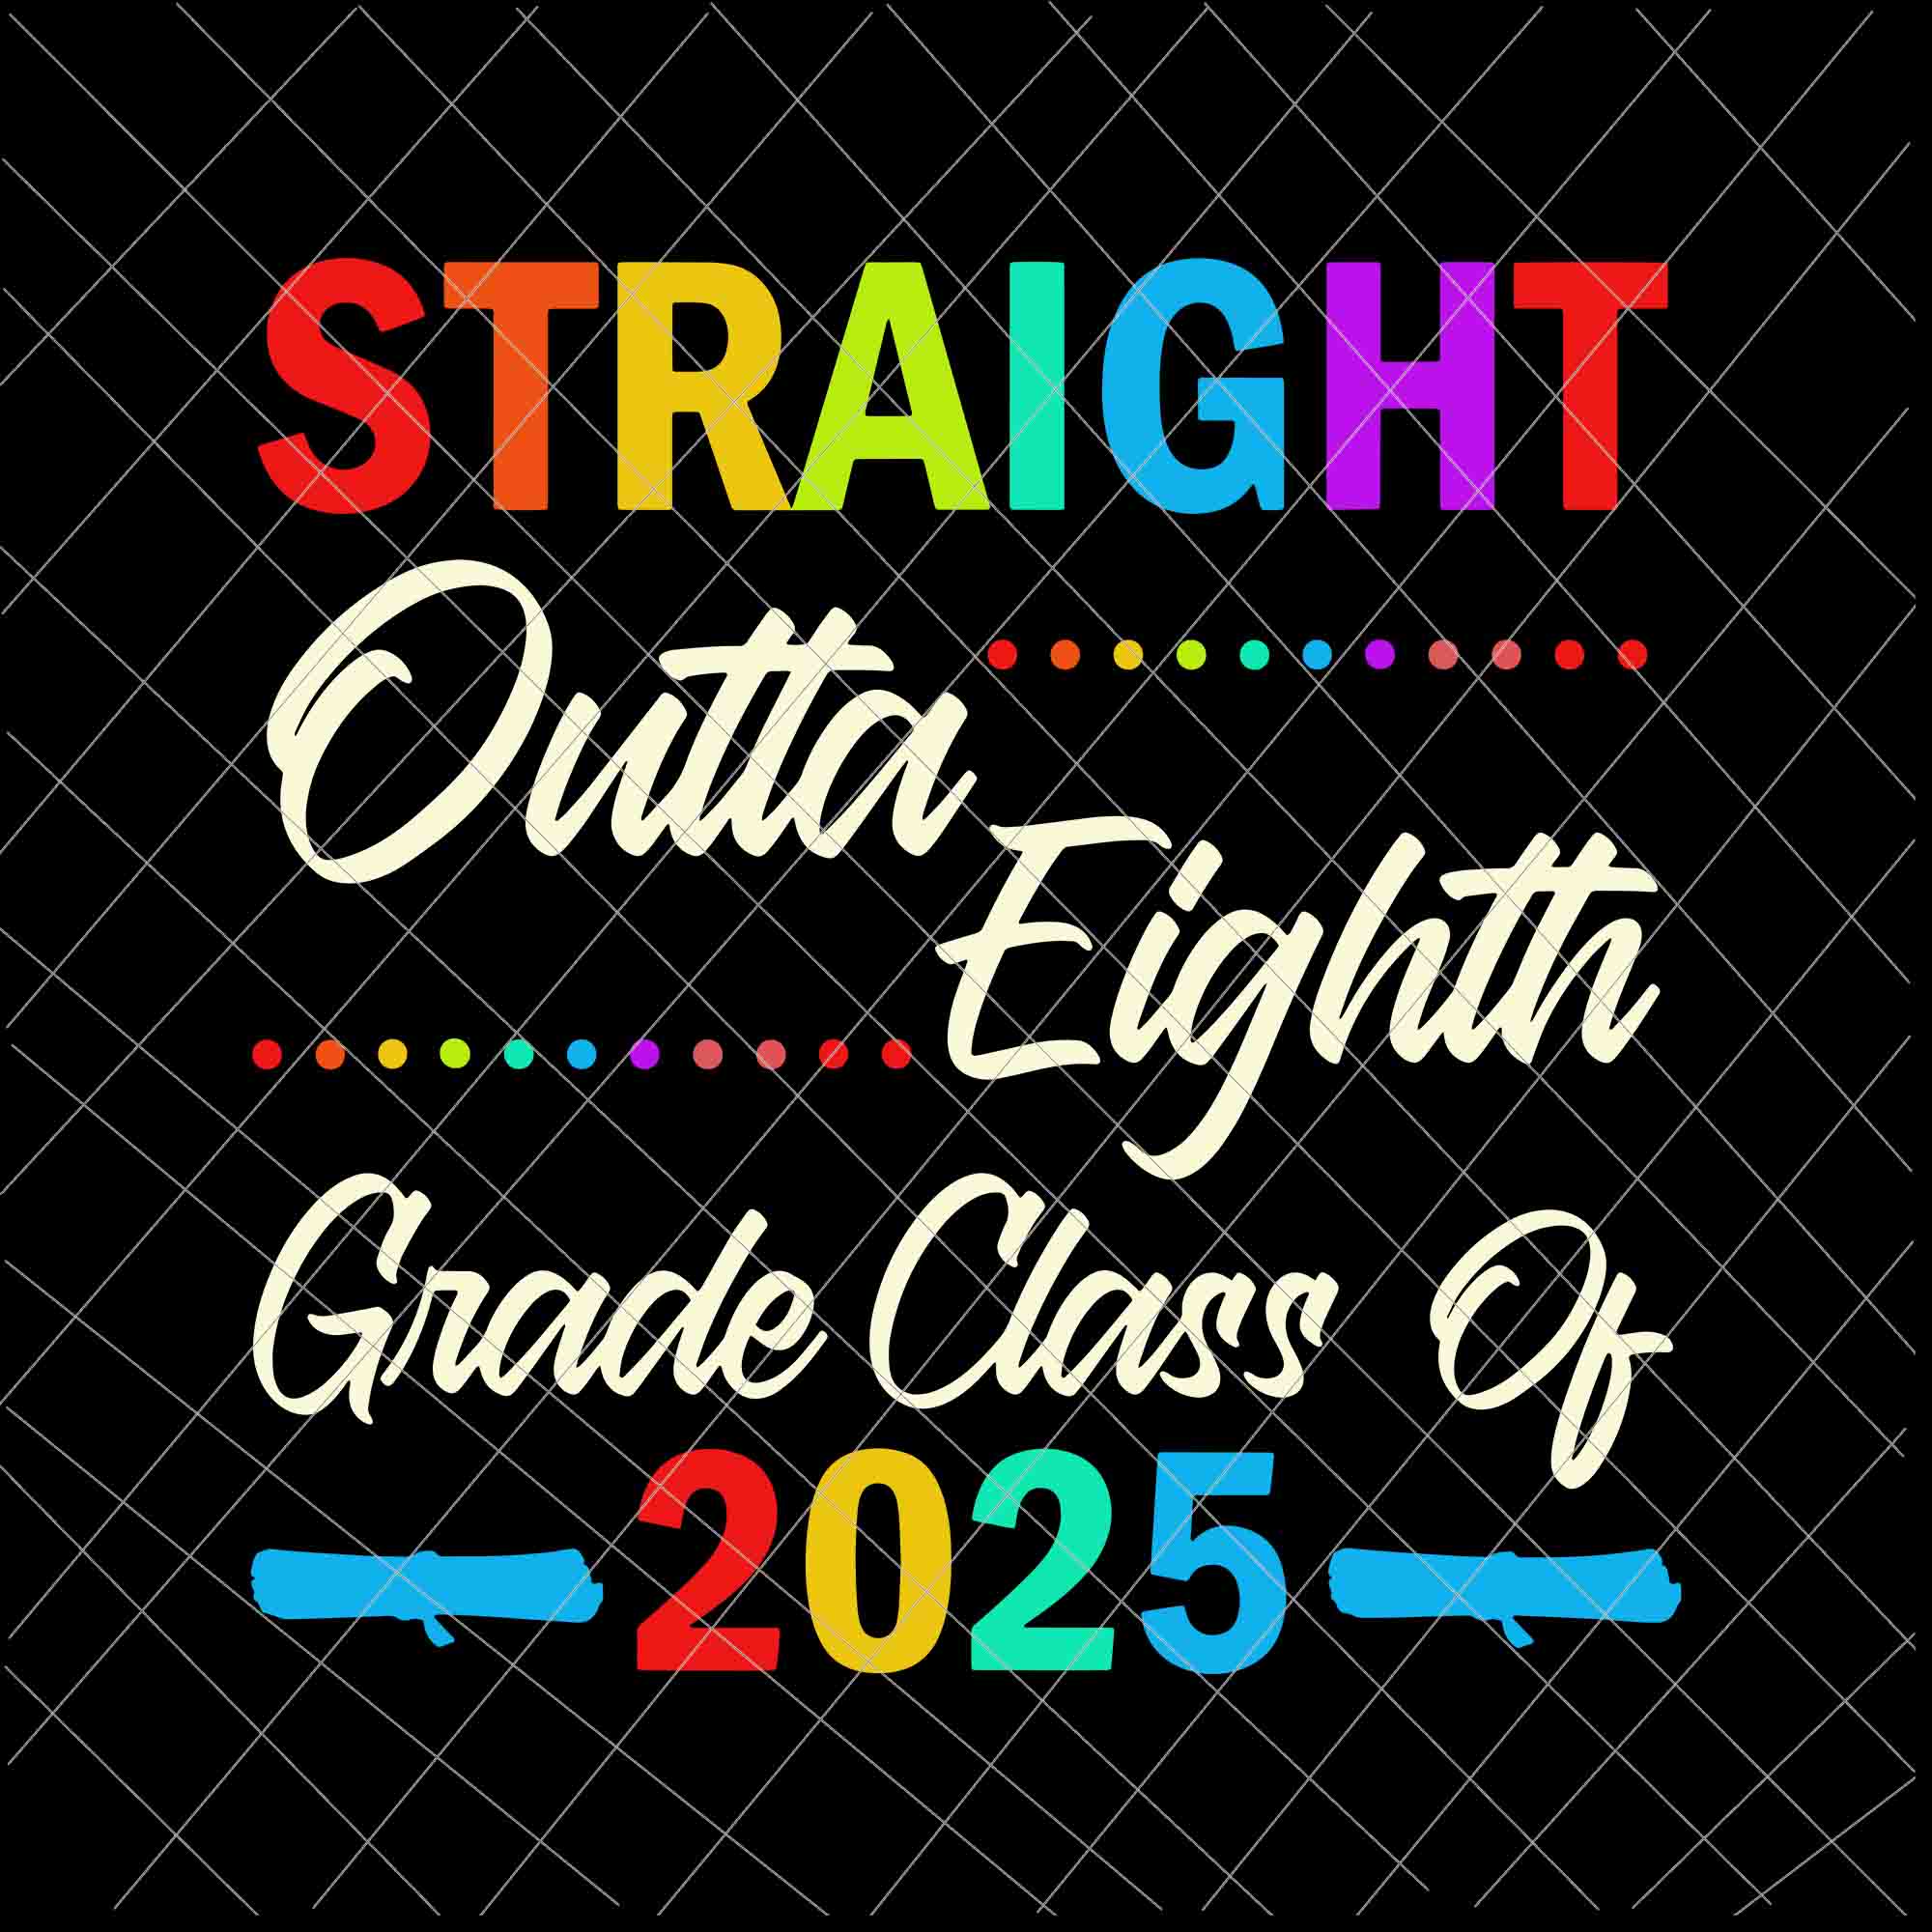 Straight Outta 8th Grade Class of 2025 Graduation Svg, Graduation Svg, Last Day Of School Svg